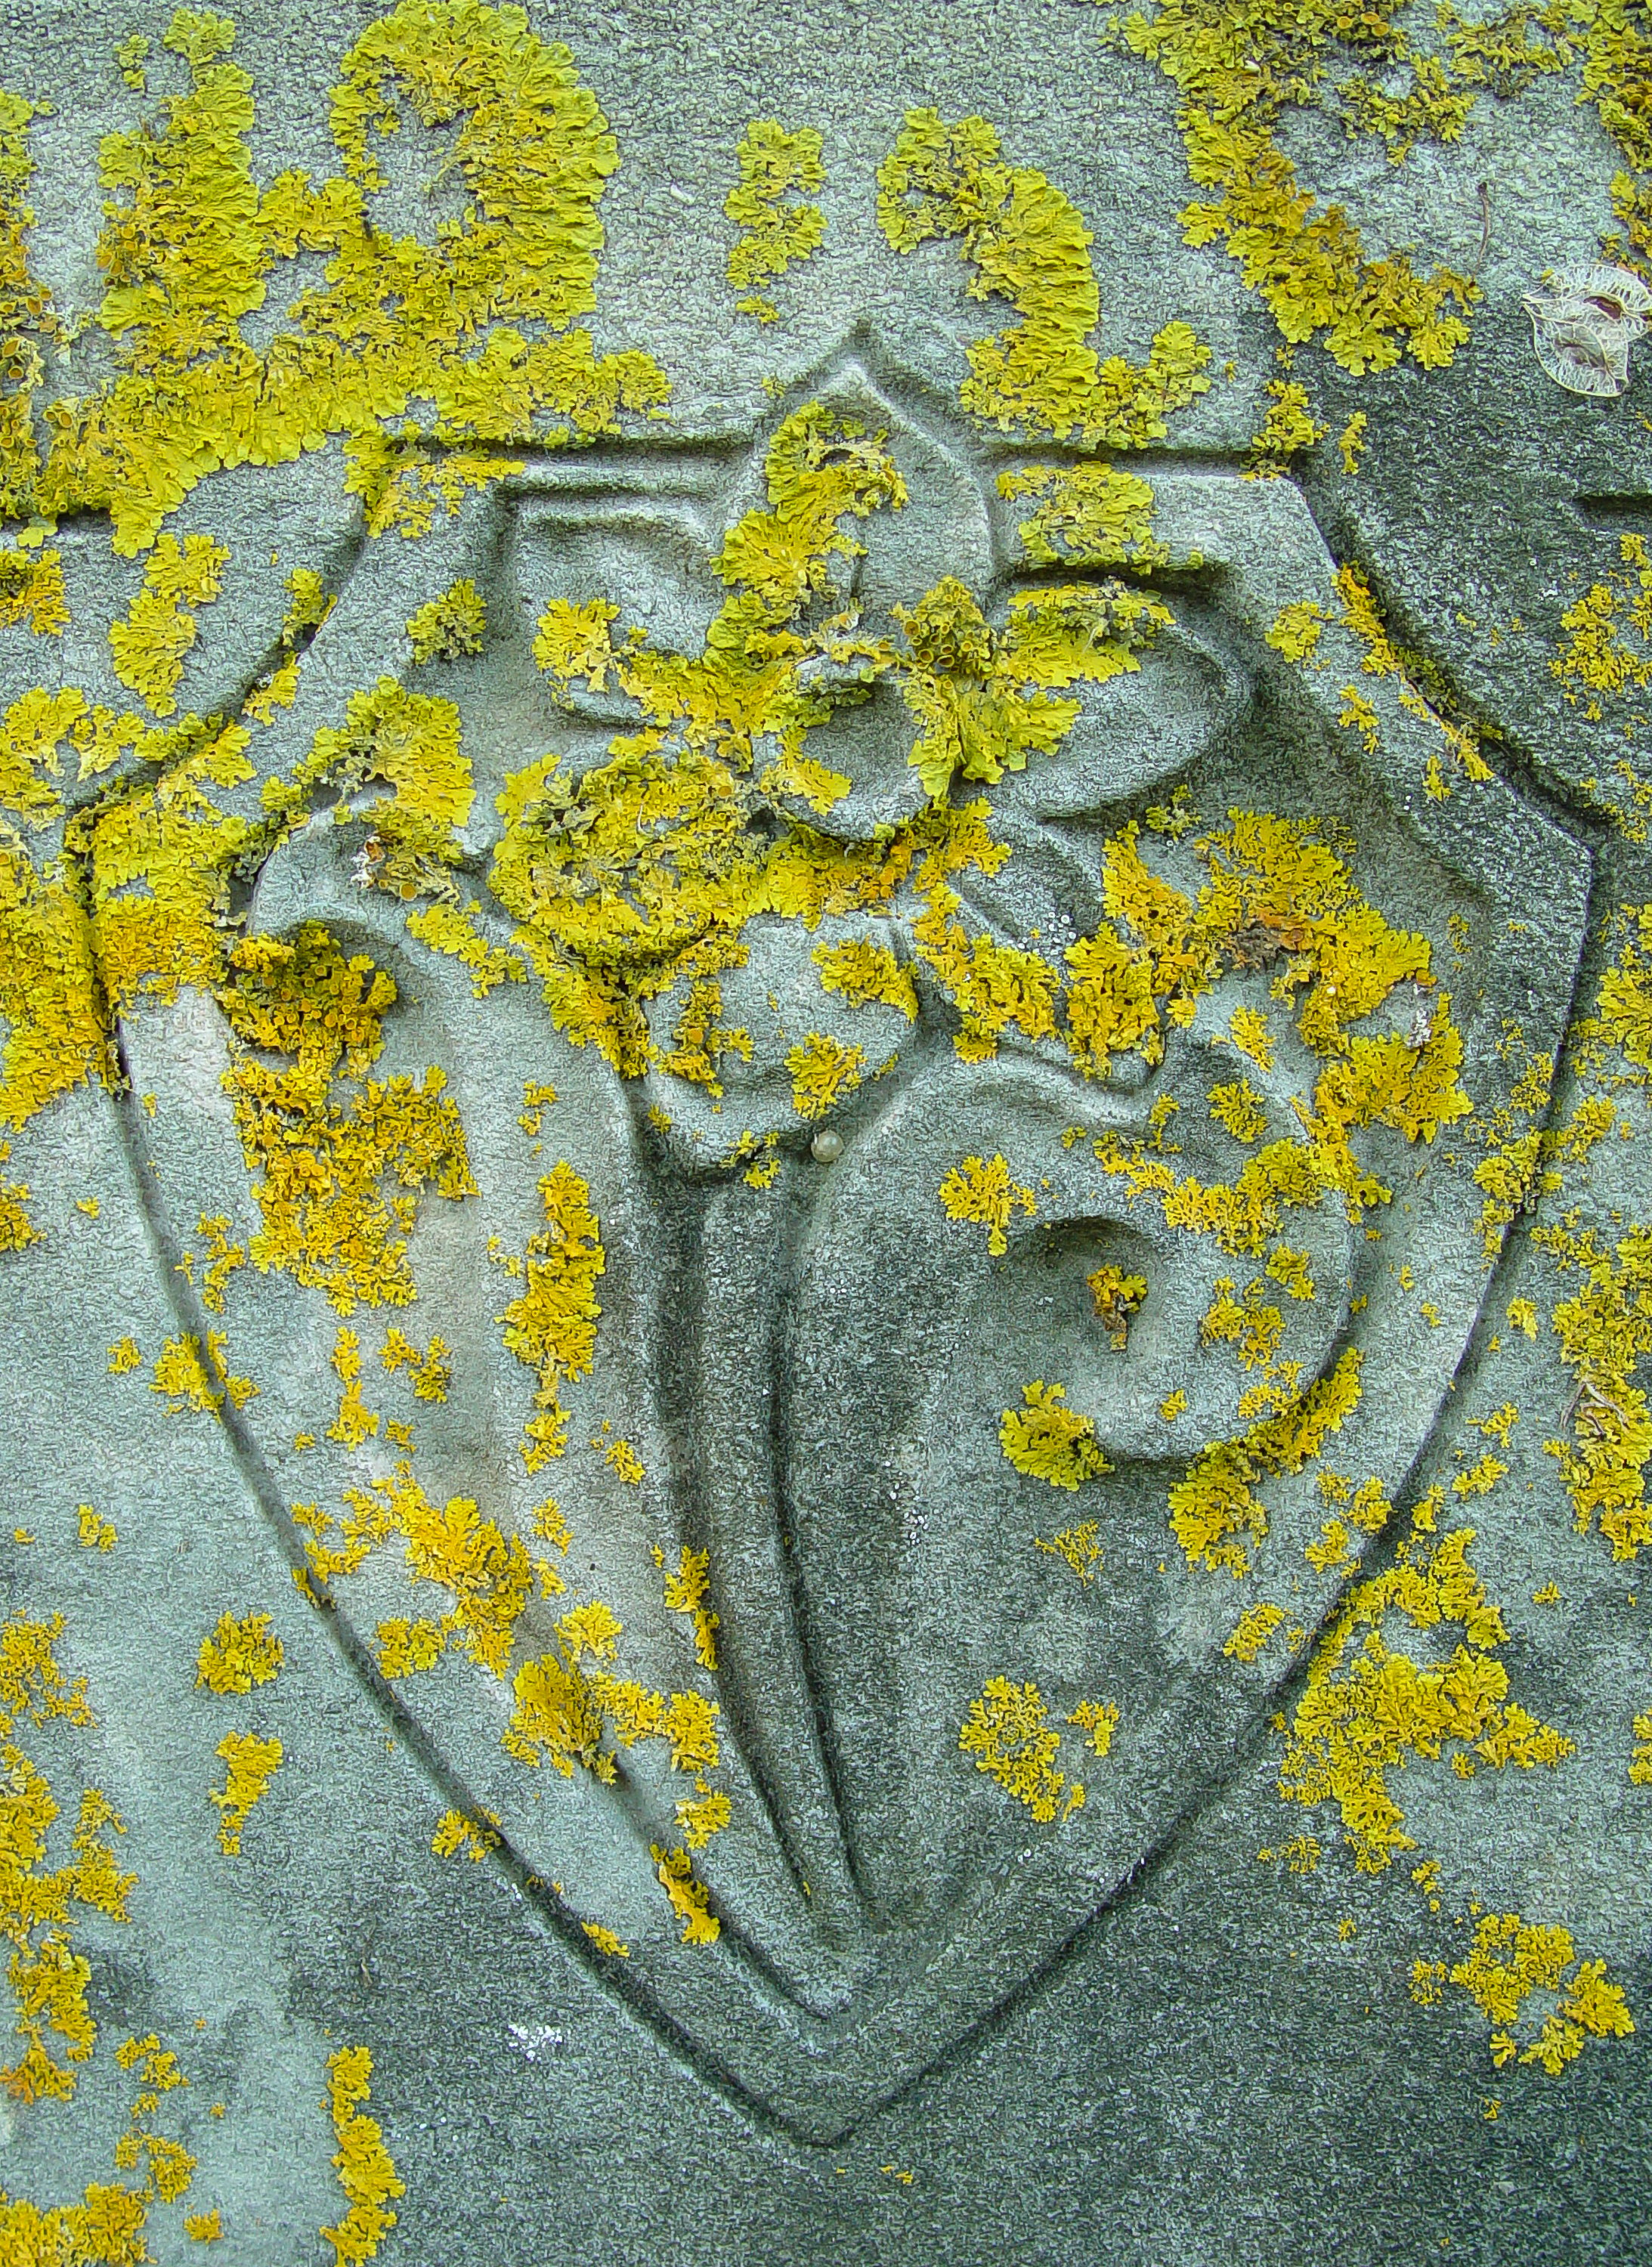 Lichen on gravestone, Providence, Rhode Island (2003)